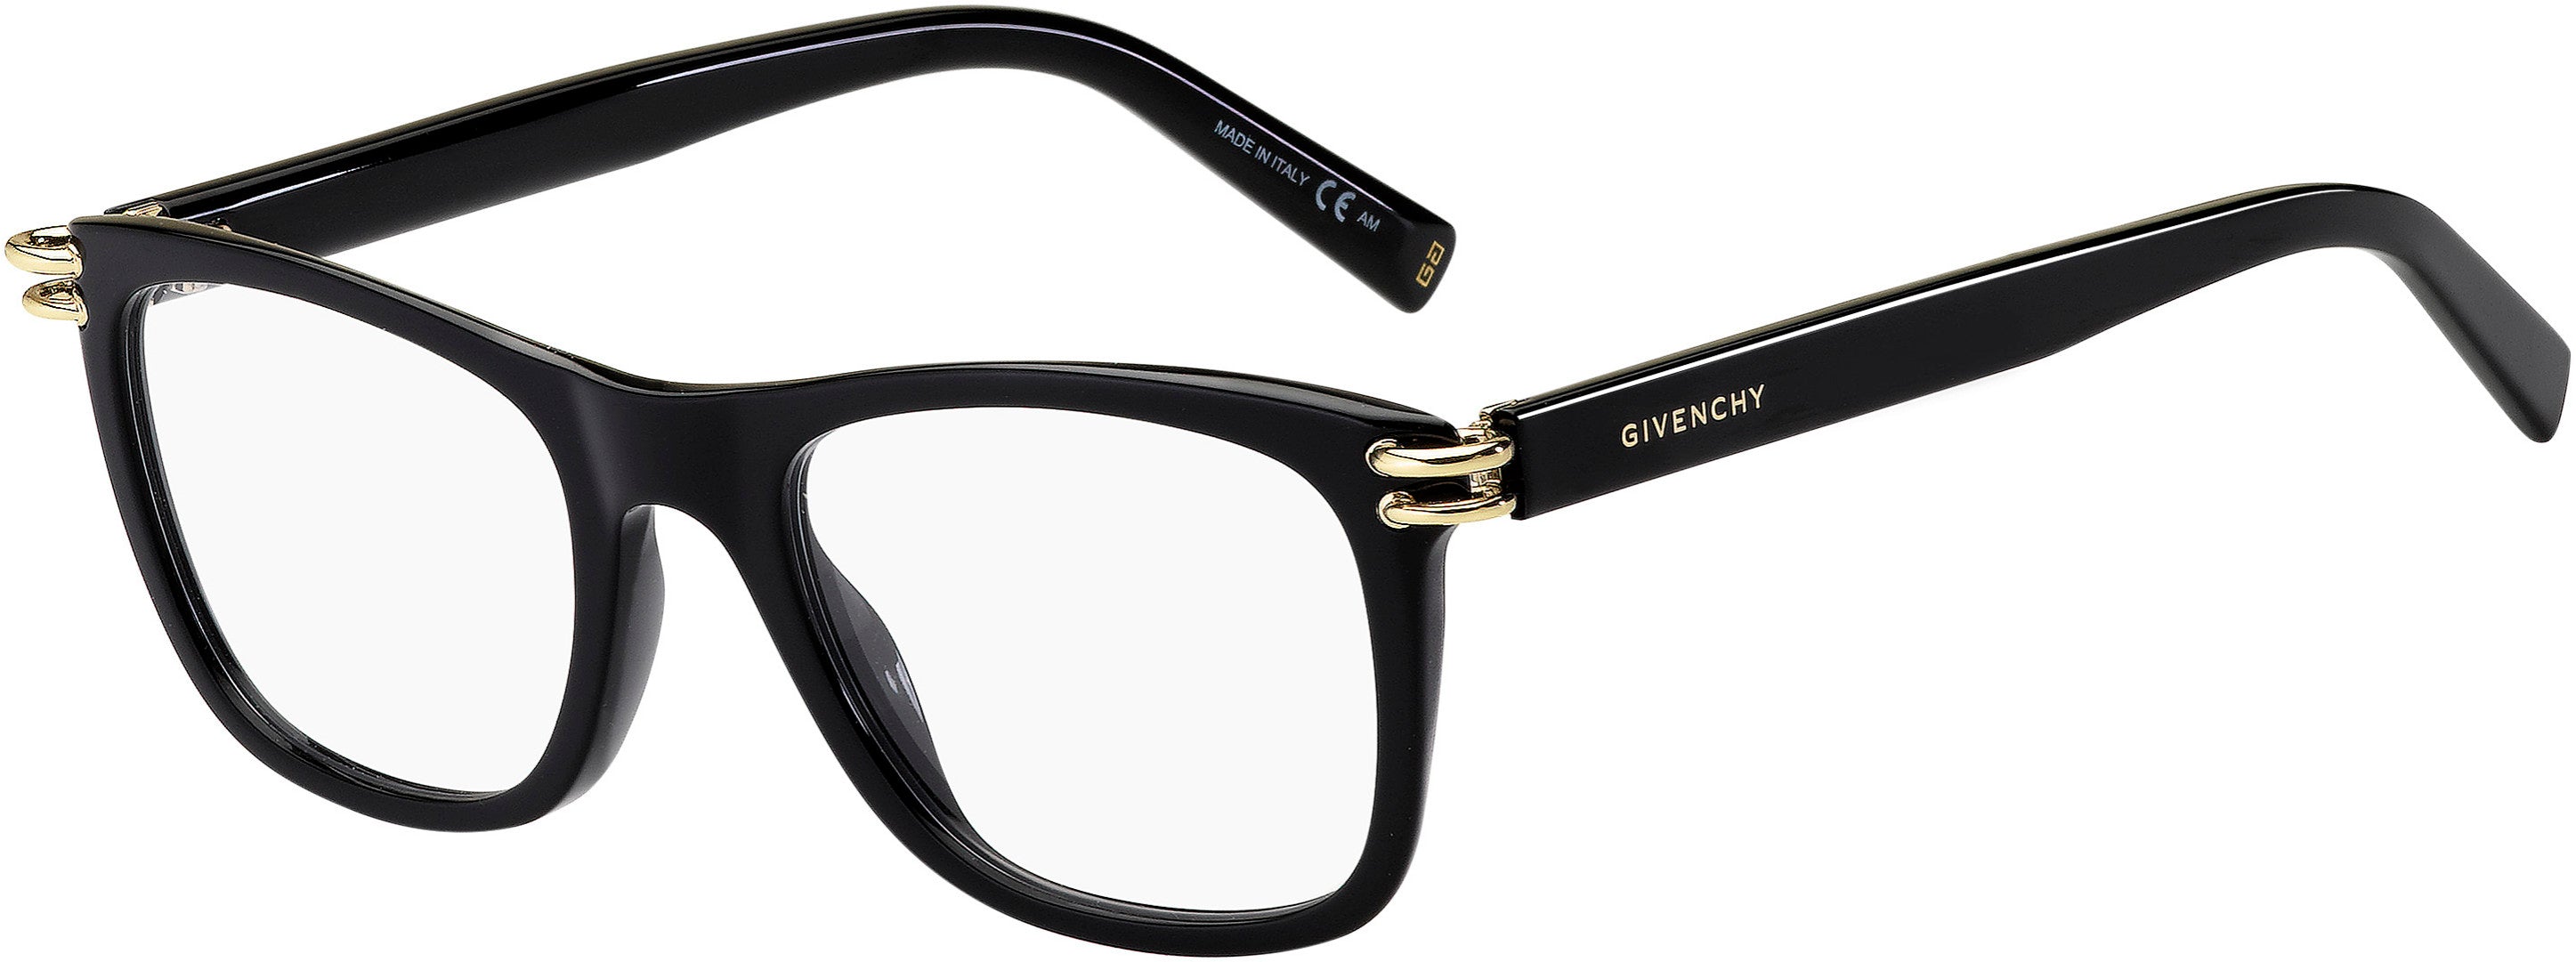  Givenchy 0131 Rectangular Eyeglasses 0807-0807  Black (00 Demo Lens)